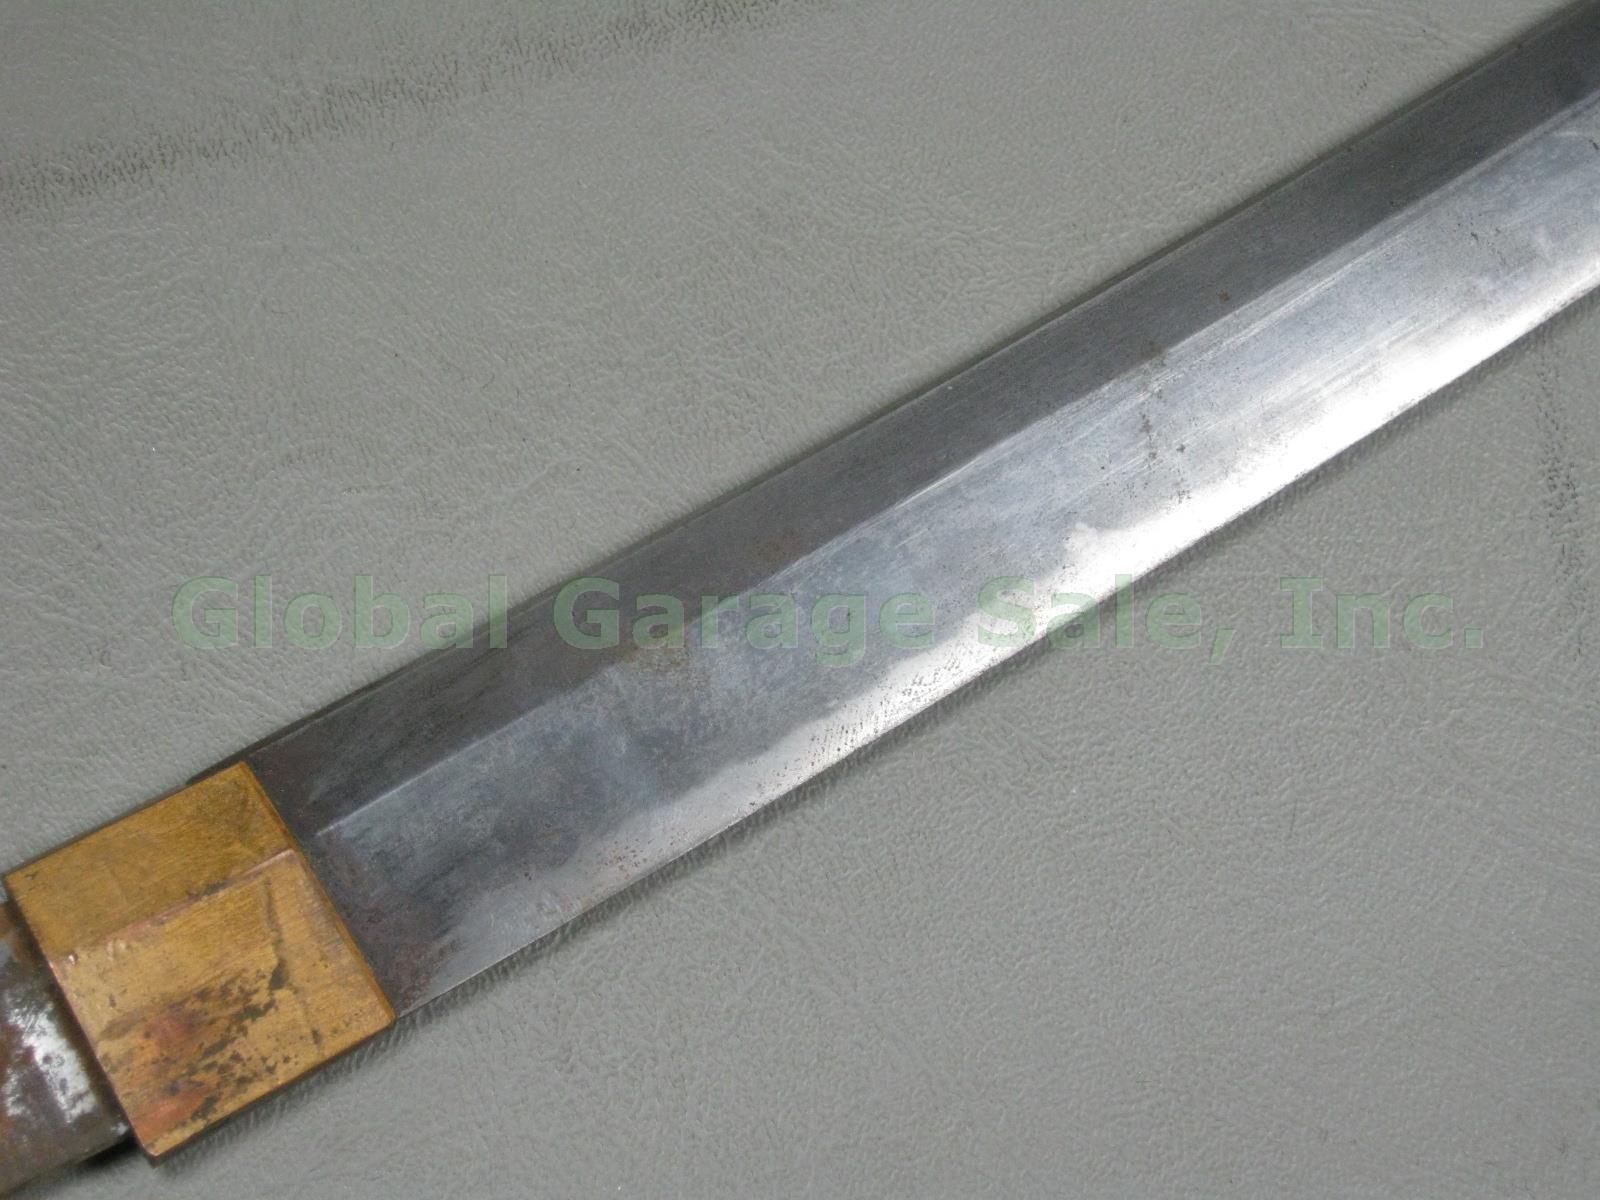 Vtg Antique Signed Nagamura Kiyonobu WWII Gendaito Katana Samurai Sword NO RES! 11